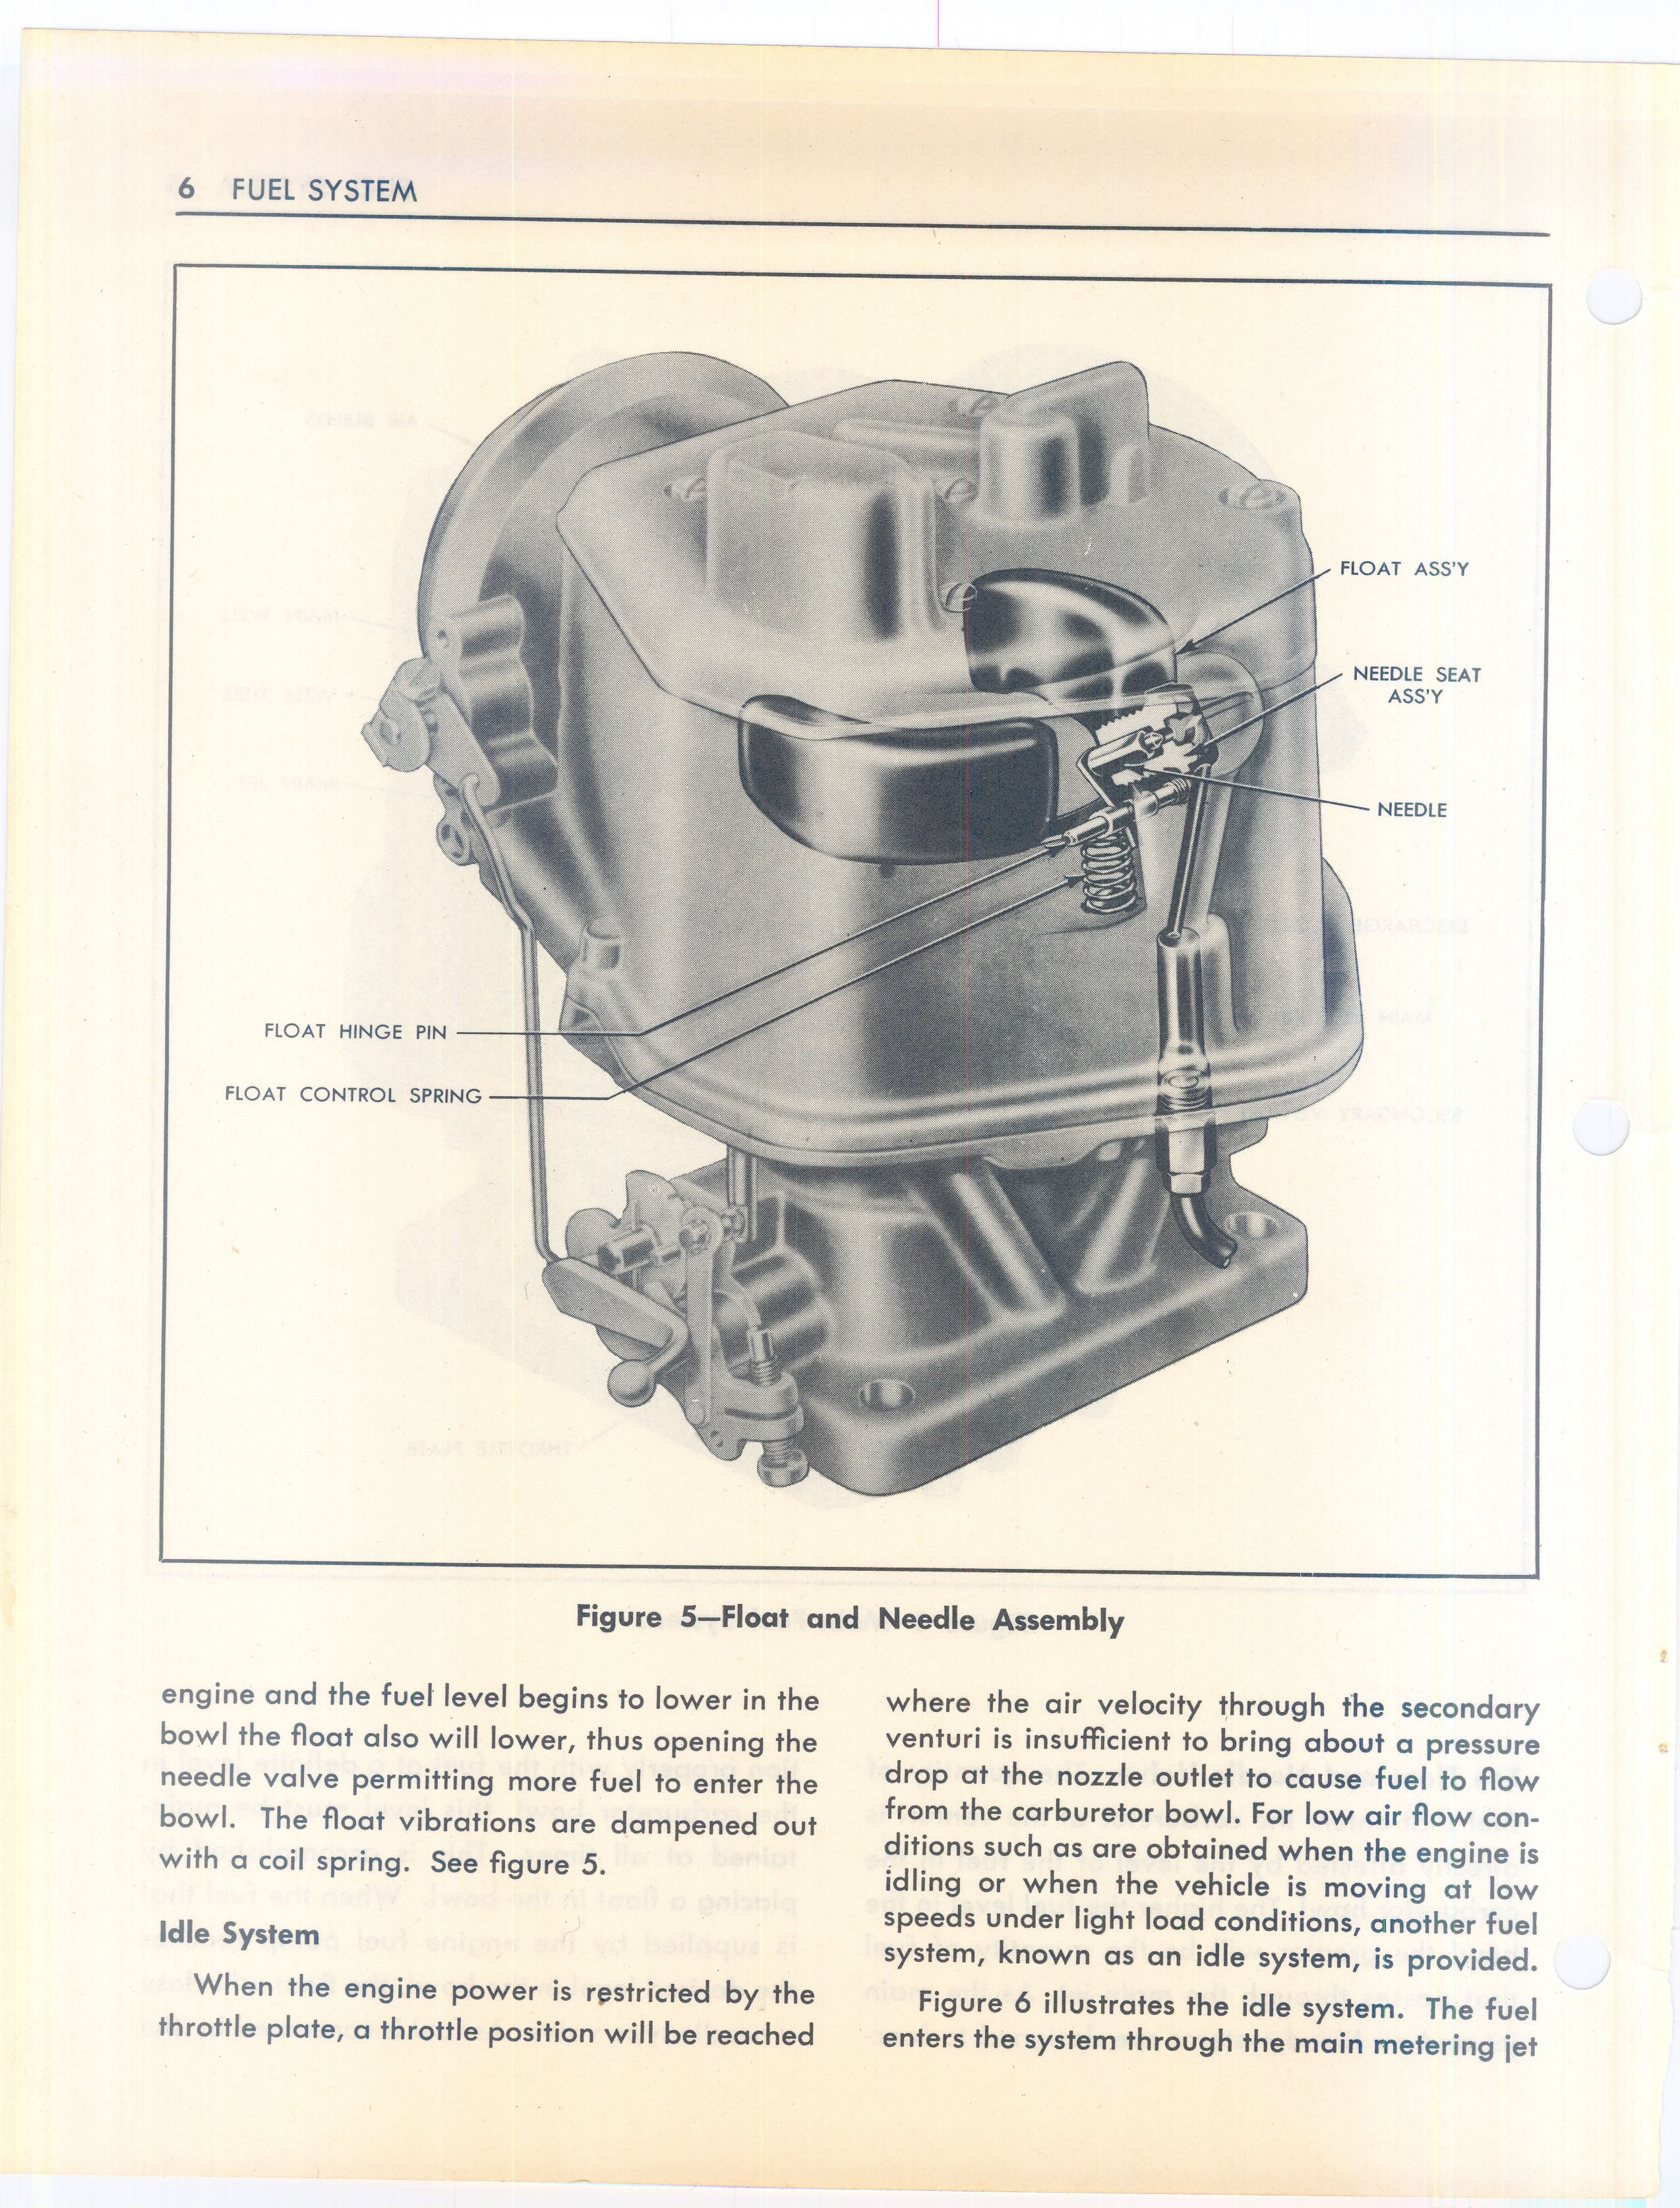 1949-1951 Ford Fuel System Repair Manual / fs5100050002.jpg